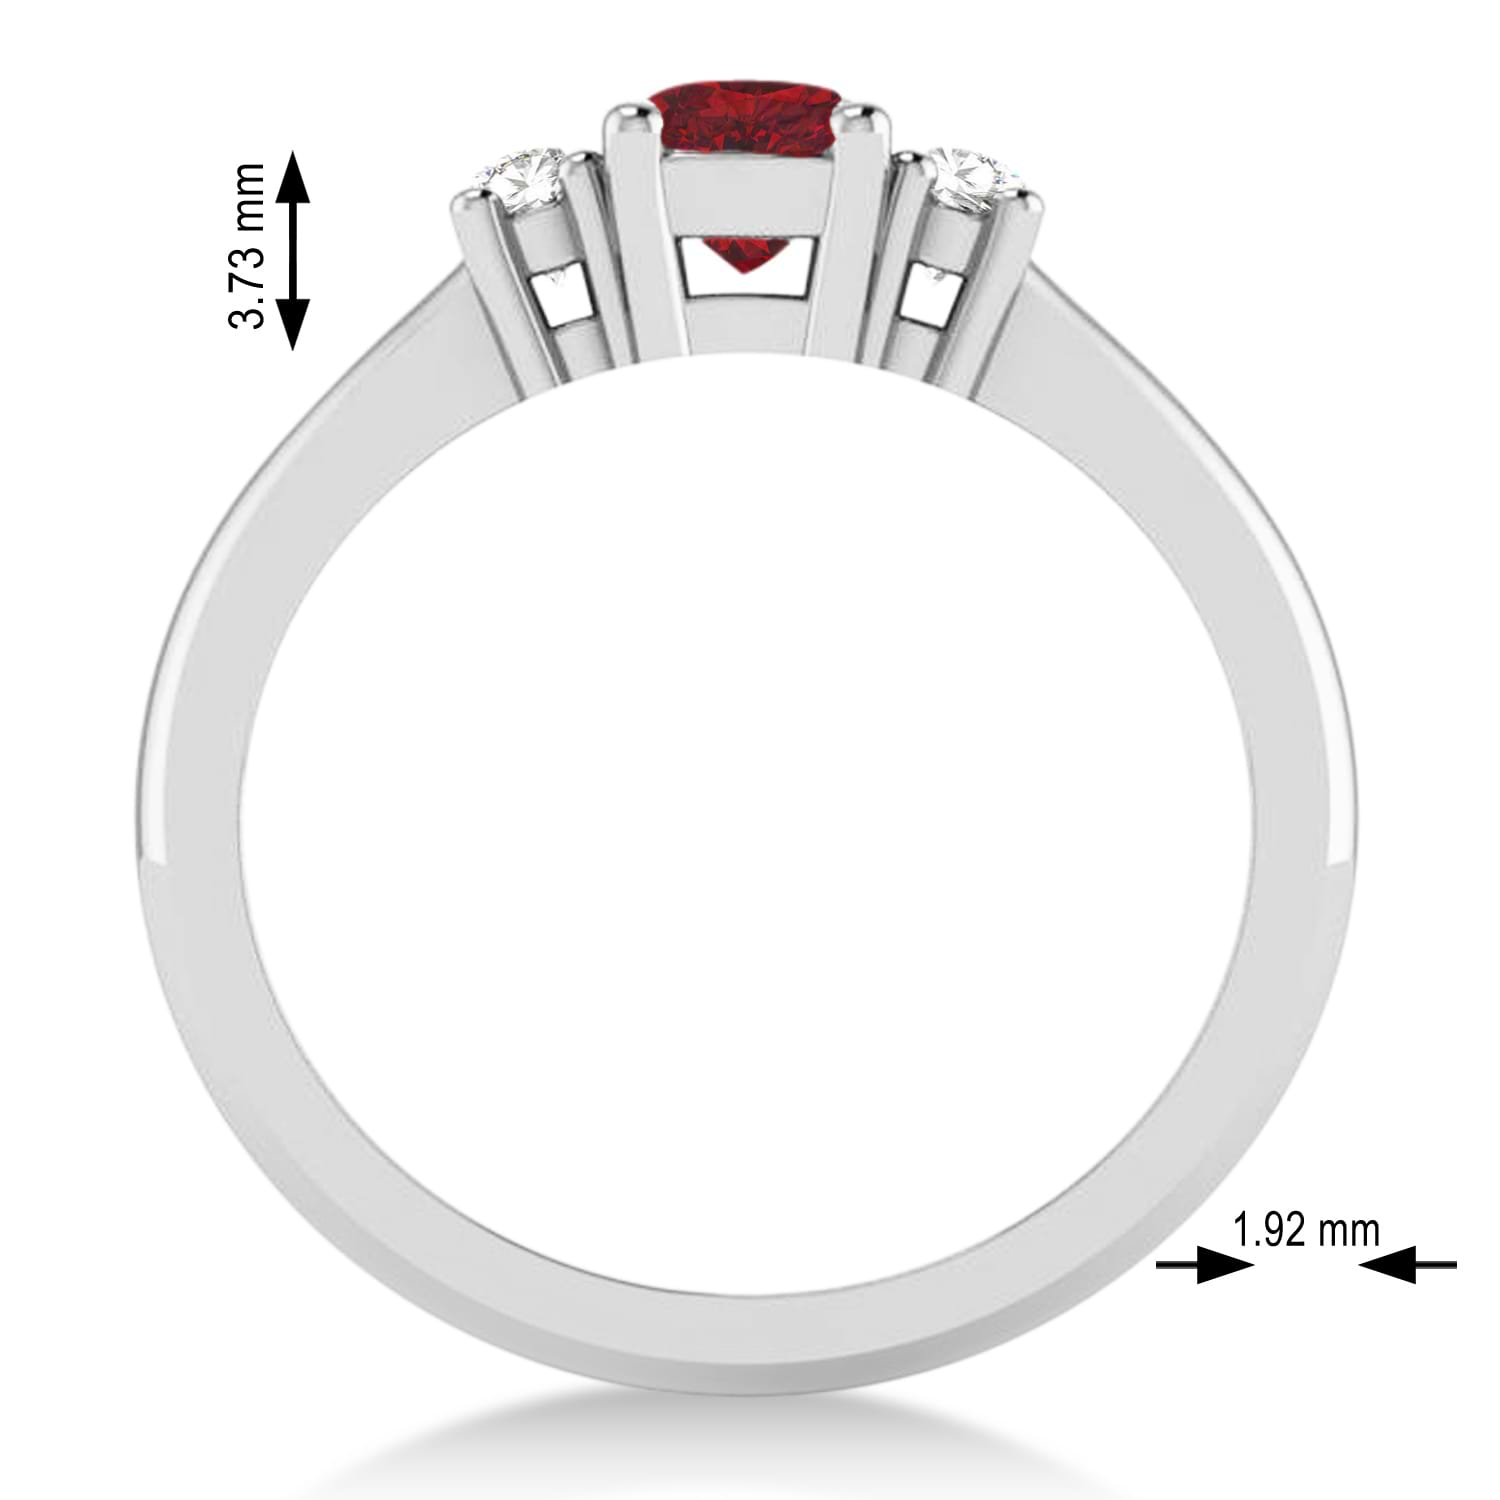 Cushion Ruby & Diamond Three-Stone Engagement Ring 14k White Gold (0.60ct)